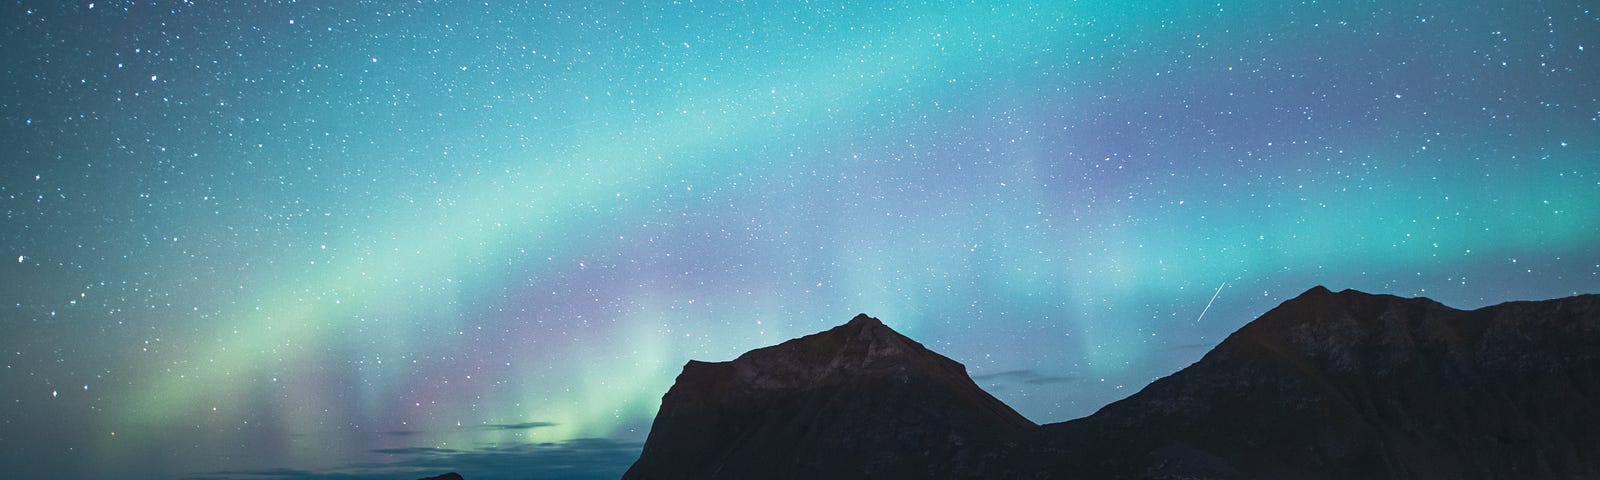 A Nordic starry night sky with aurora borealis, sea and a mountain siluette.